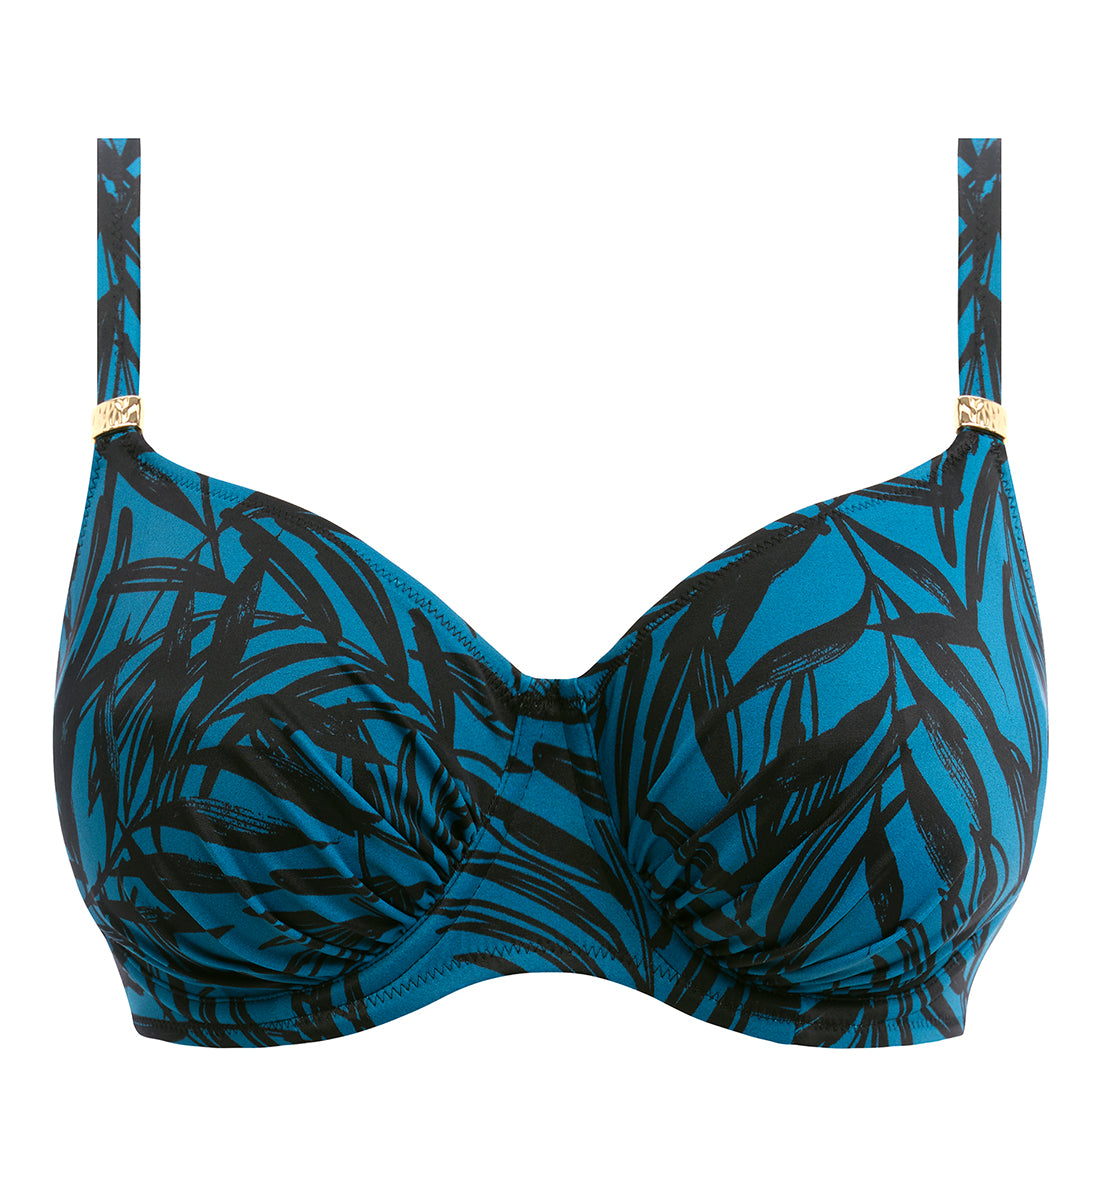 Fantasie Palmetto Bay Gathered Full Cup Underwire Bikini Top (502001),30F,Zen Blue - Zen Blue,30F